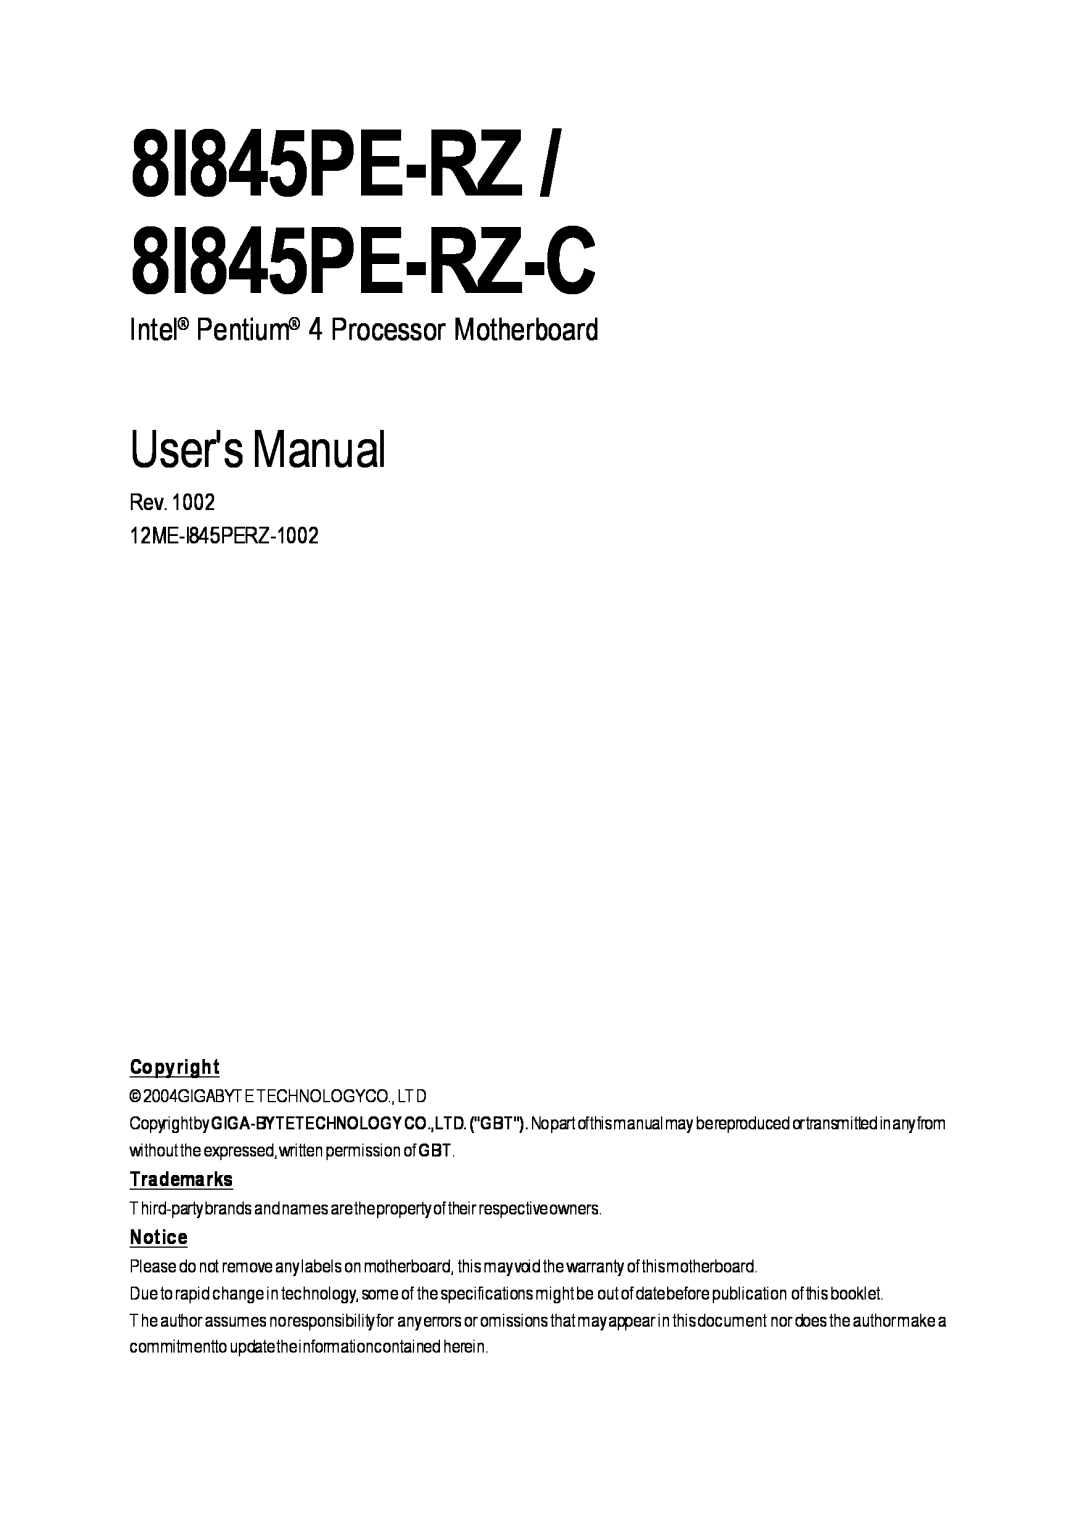 Intel user manual 8I845PE-RZ / 8I845PE-RZ-C, Intel Pentium 4 Processor Motherboard, Copyright, Trademarks 